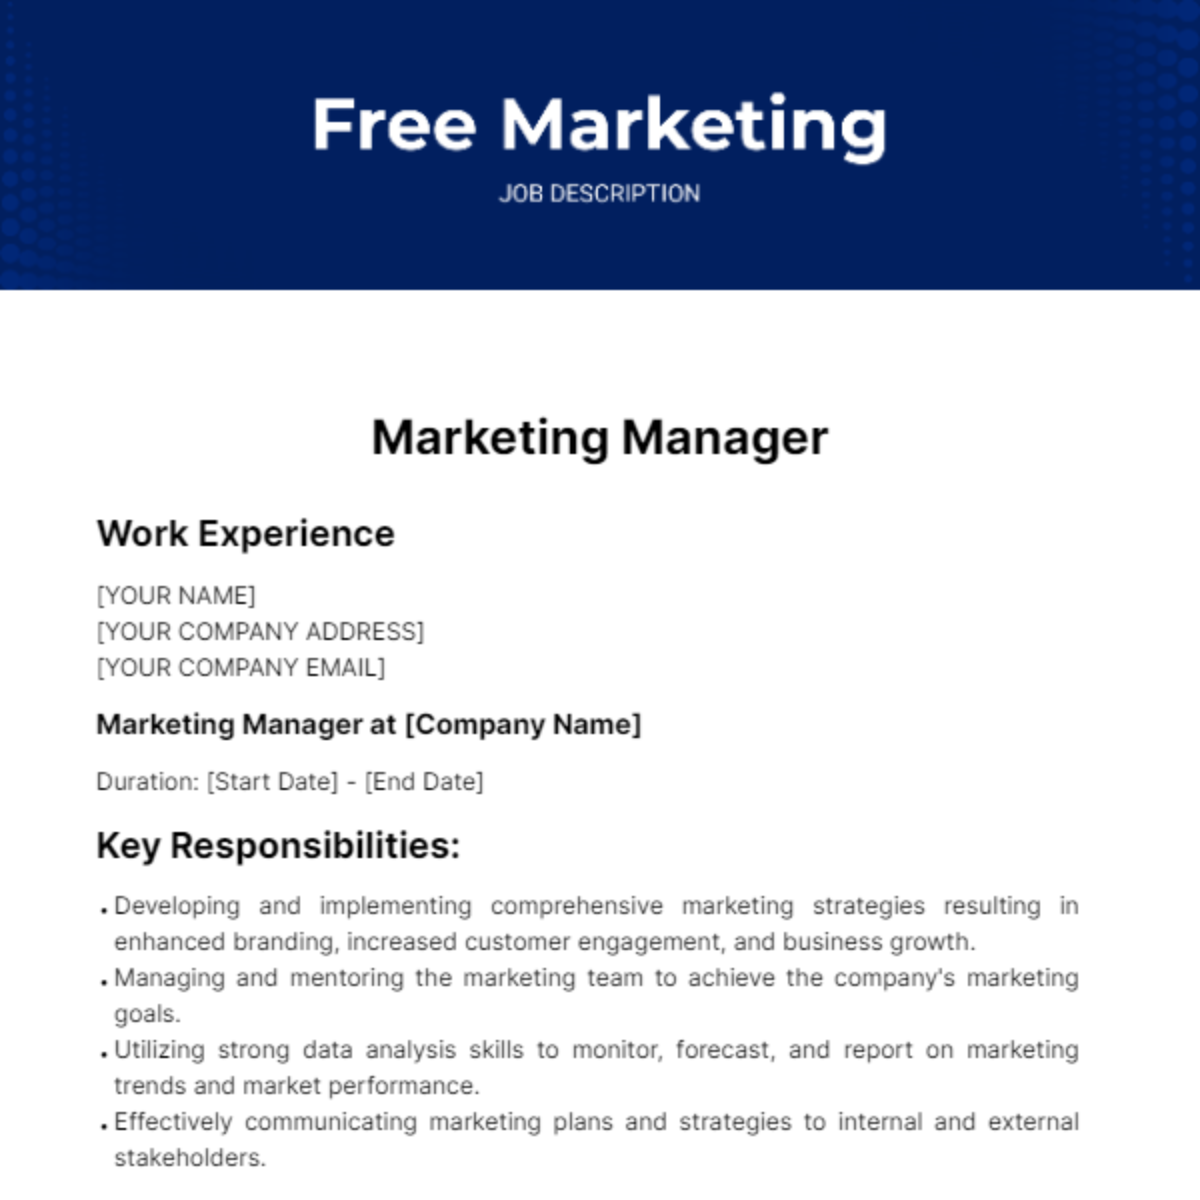 Free Marketing Job Description For Resume Template